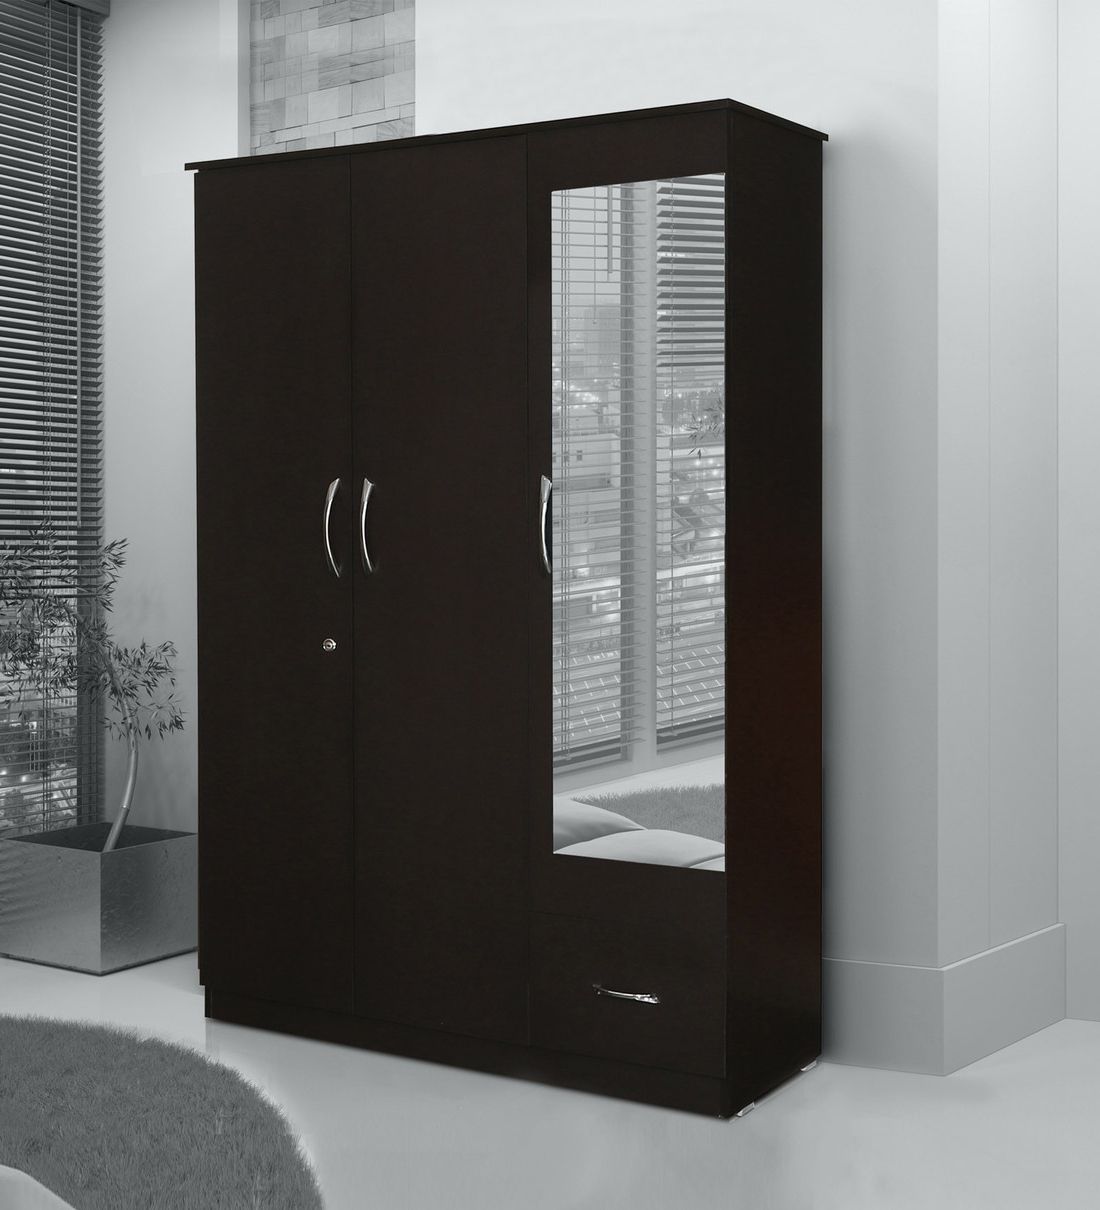 Buy Trois 3 Door Wardrobe In Wenge Finish With Mirror At 22% Off Fullstock | Pepperfry With 3 Door Black Wardrobes (View 18 of 20)